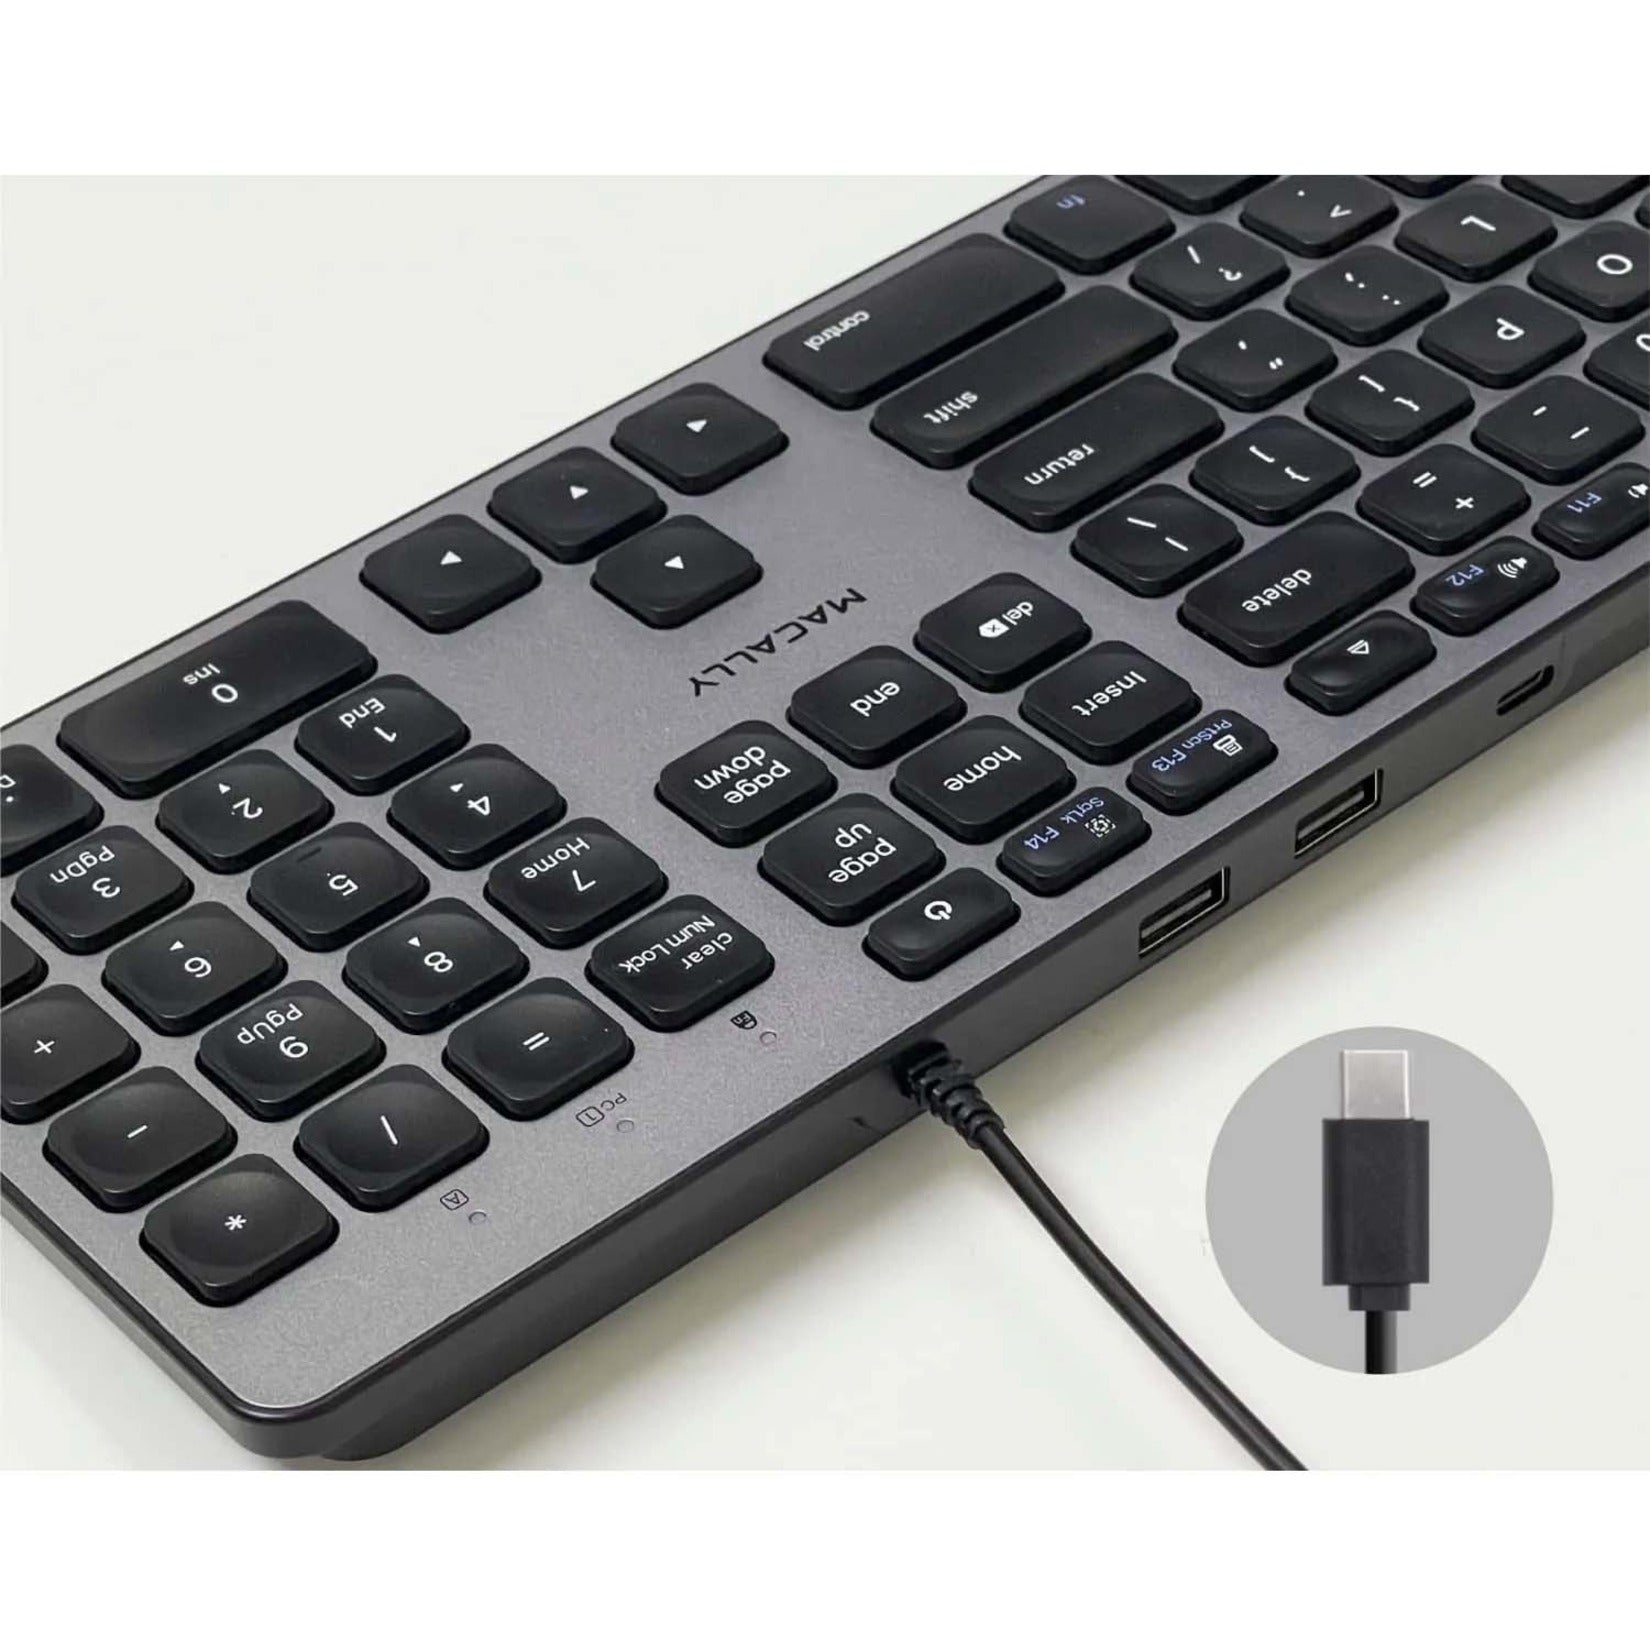 Macally UCZKEYHUBACSG Keyboard, Full-size Keyboard with Low-profile Keys, LED Indicator, and Slim Design